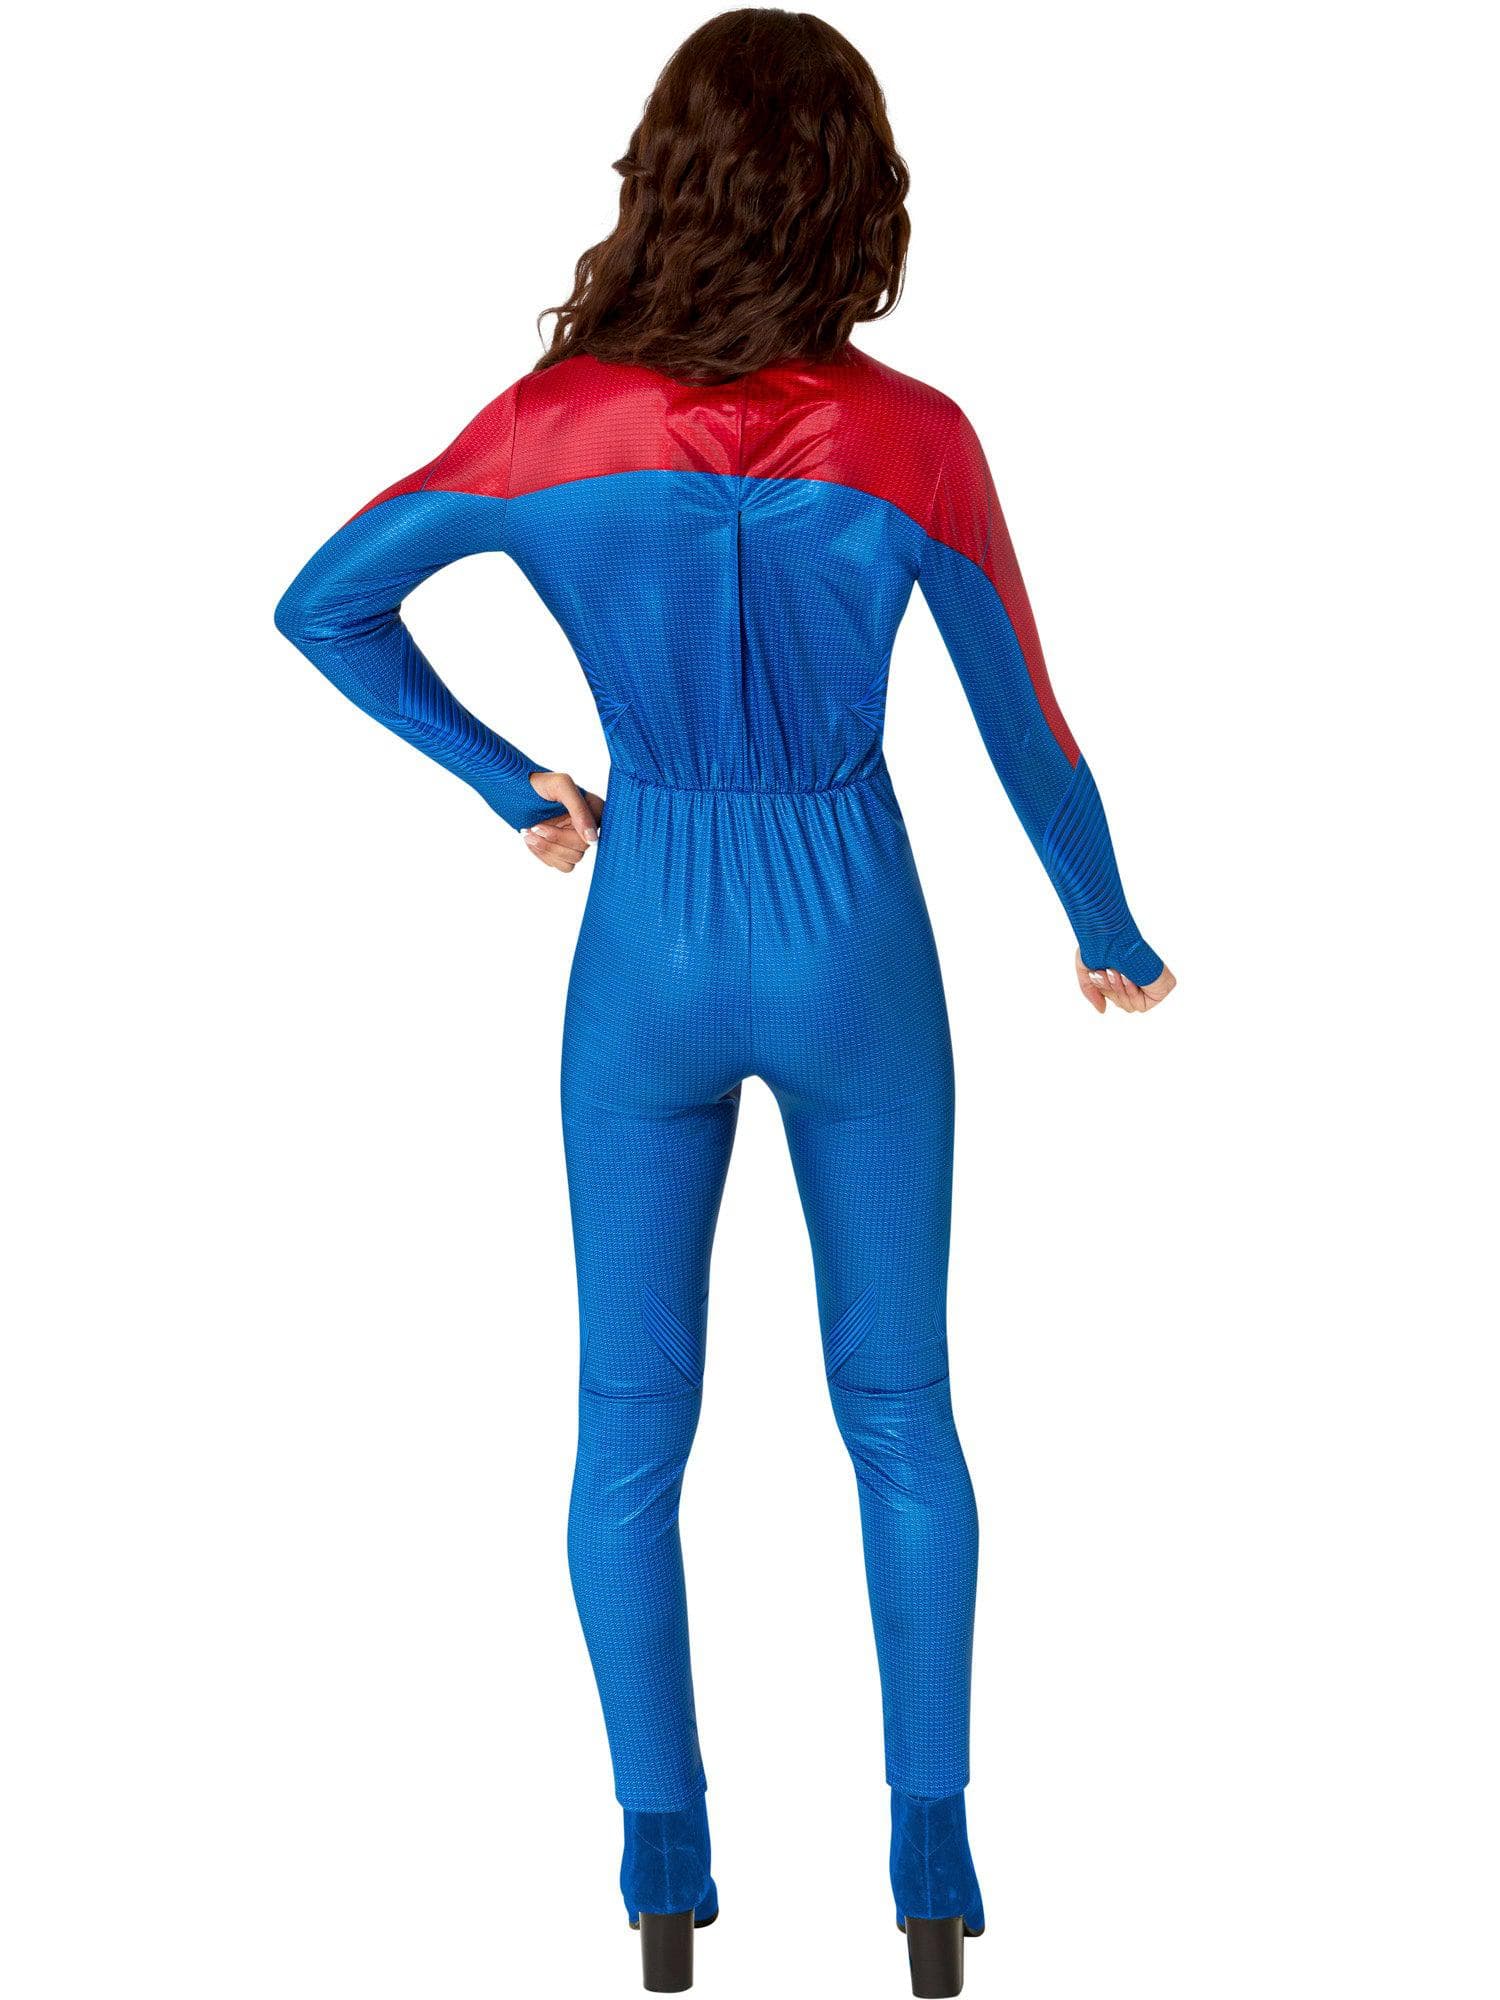 The Flash Supergirl Adult Costume - costumes.com